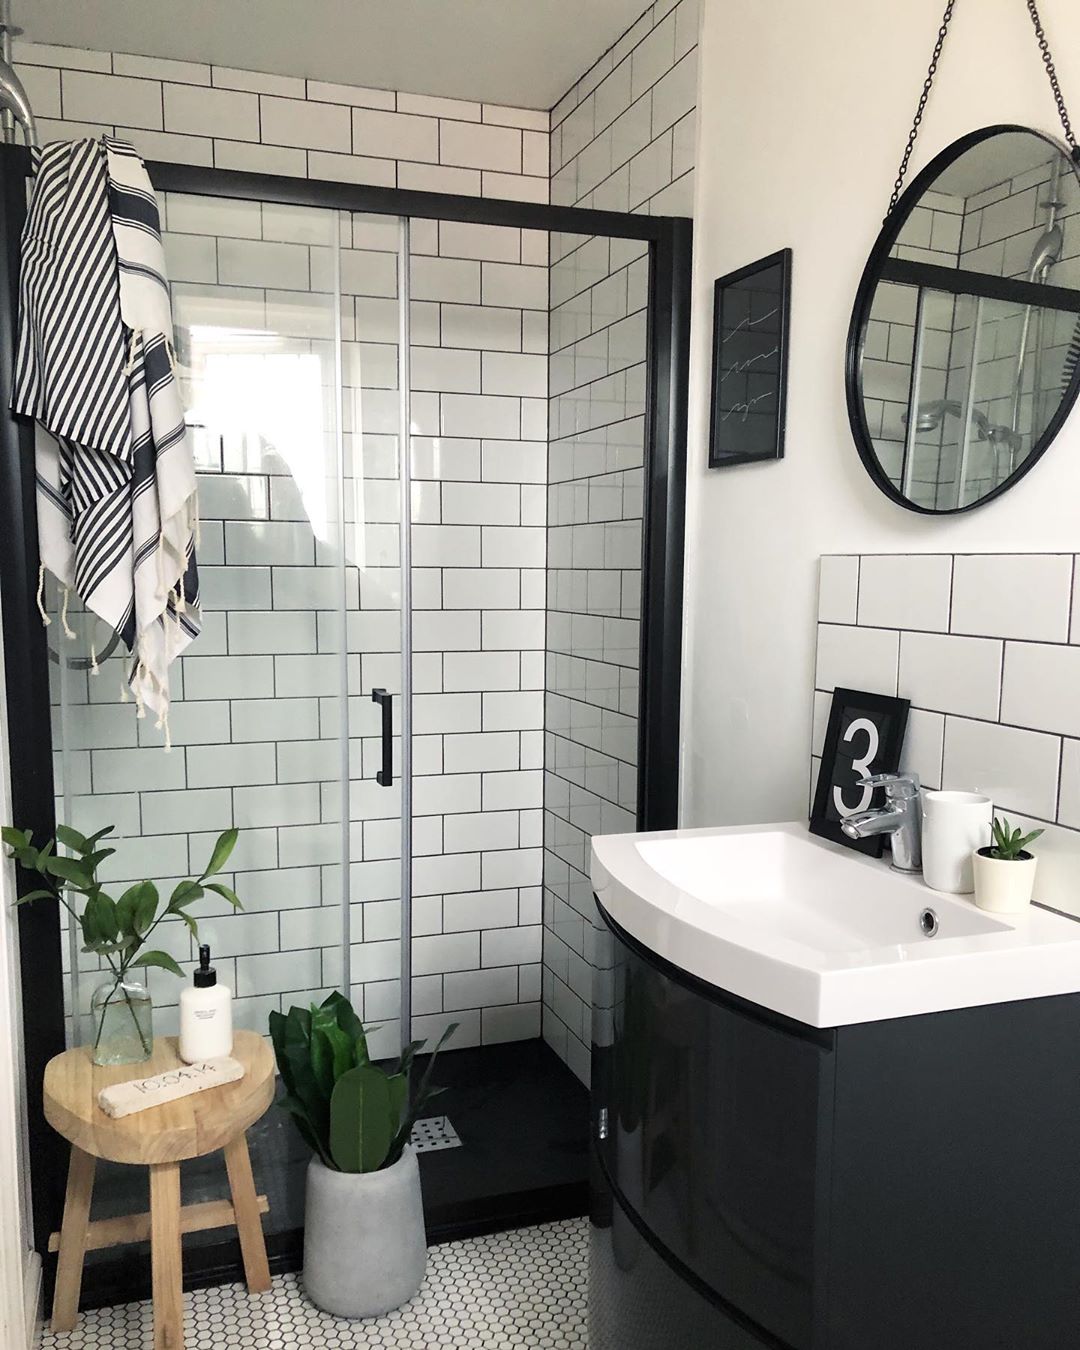 White and black small bathroom with round mirror. Photo by Instagram user @nest_twenty_eight